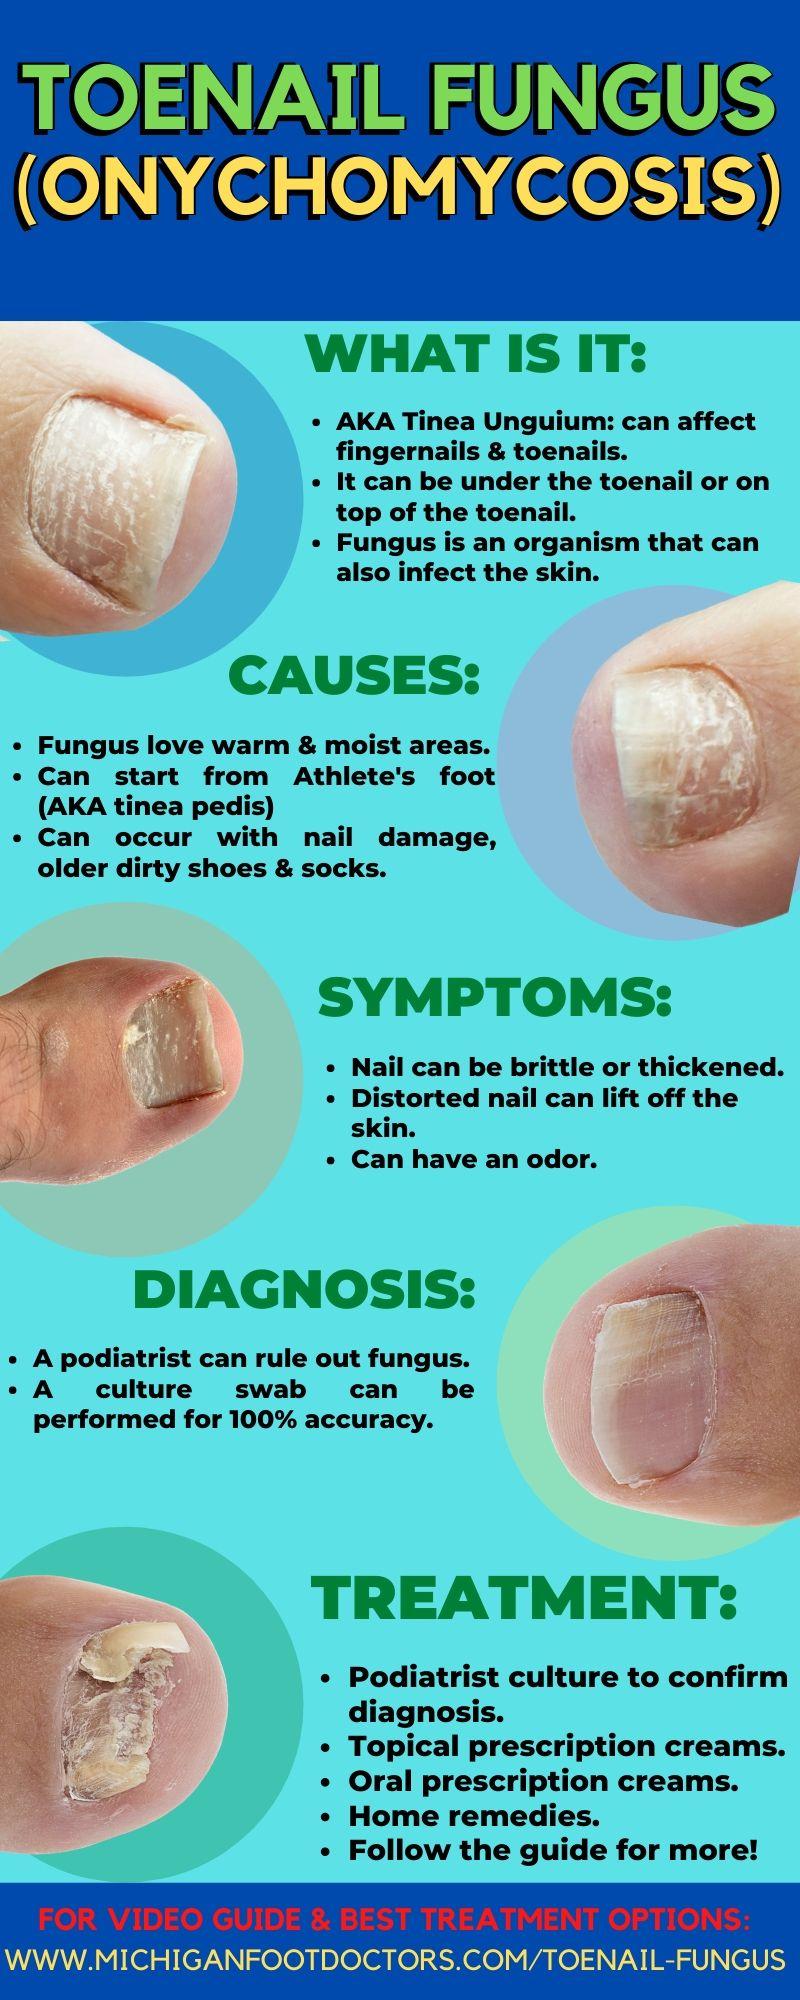 Can home remedies help get rid of toenail fungus? 